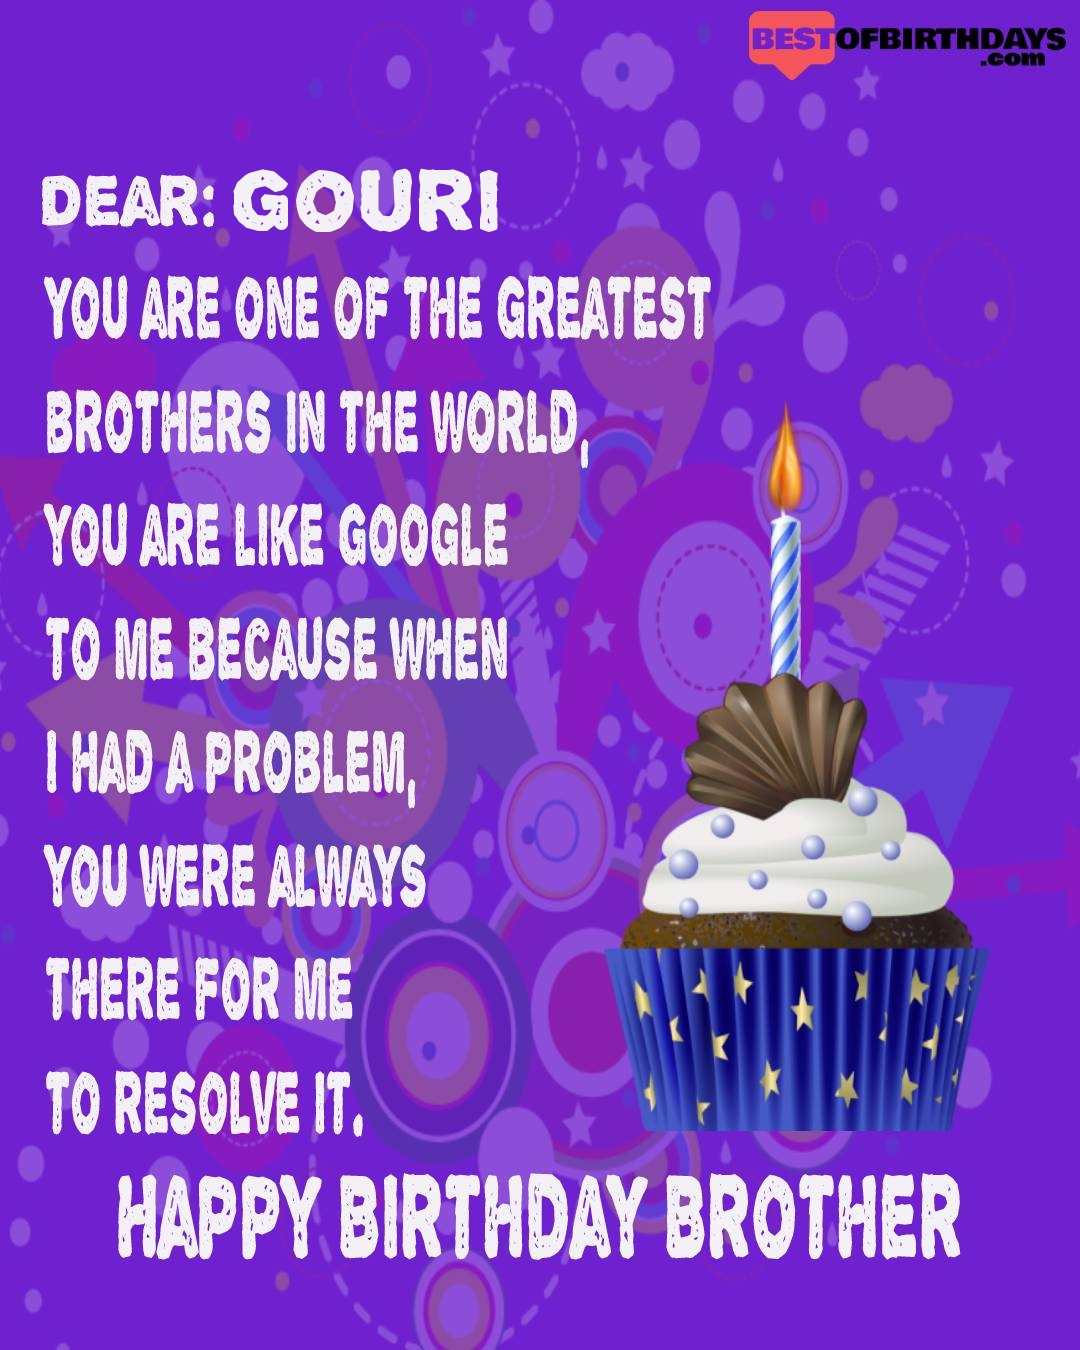 Happy birthday gouri bhai brother bro